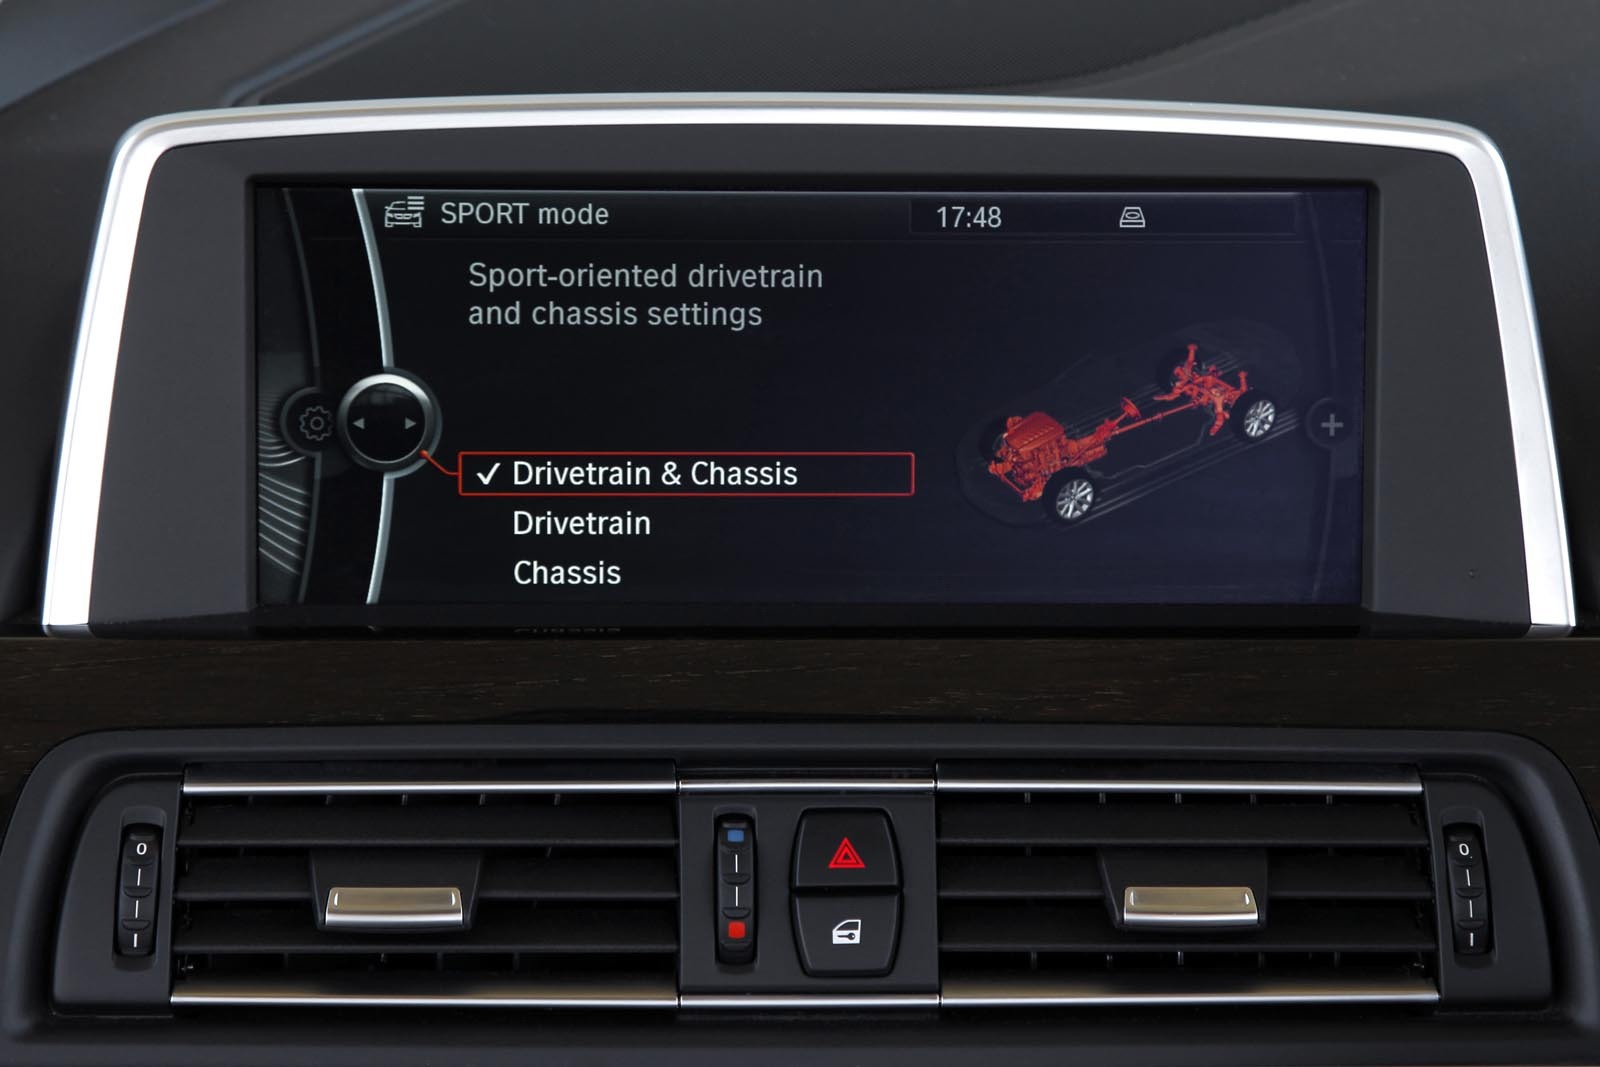 BMW Seria 6 Convertible poate fi dotat cu un display urias de 10.2 inch diagonala